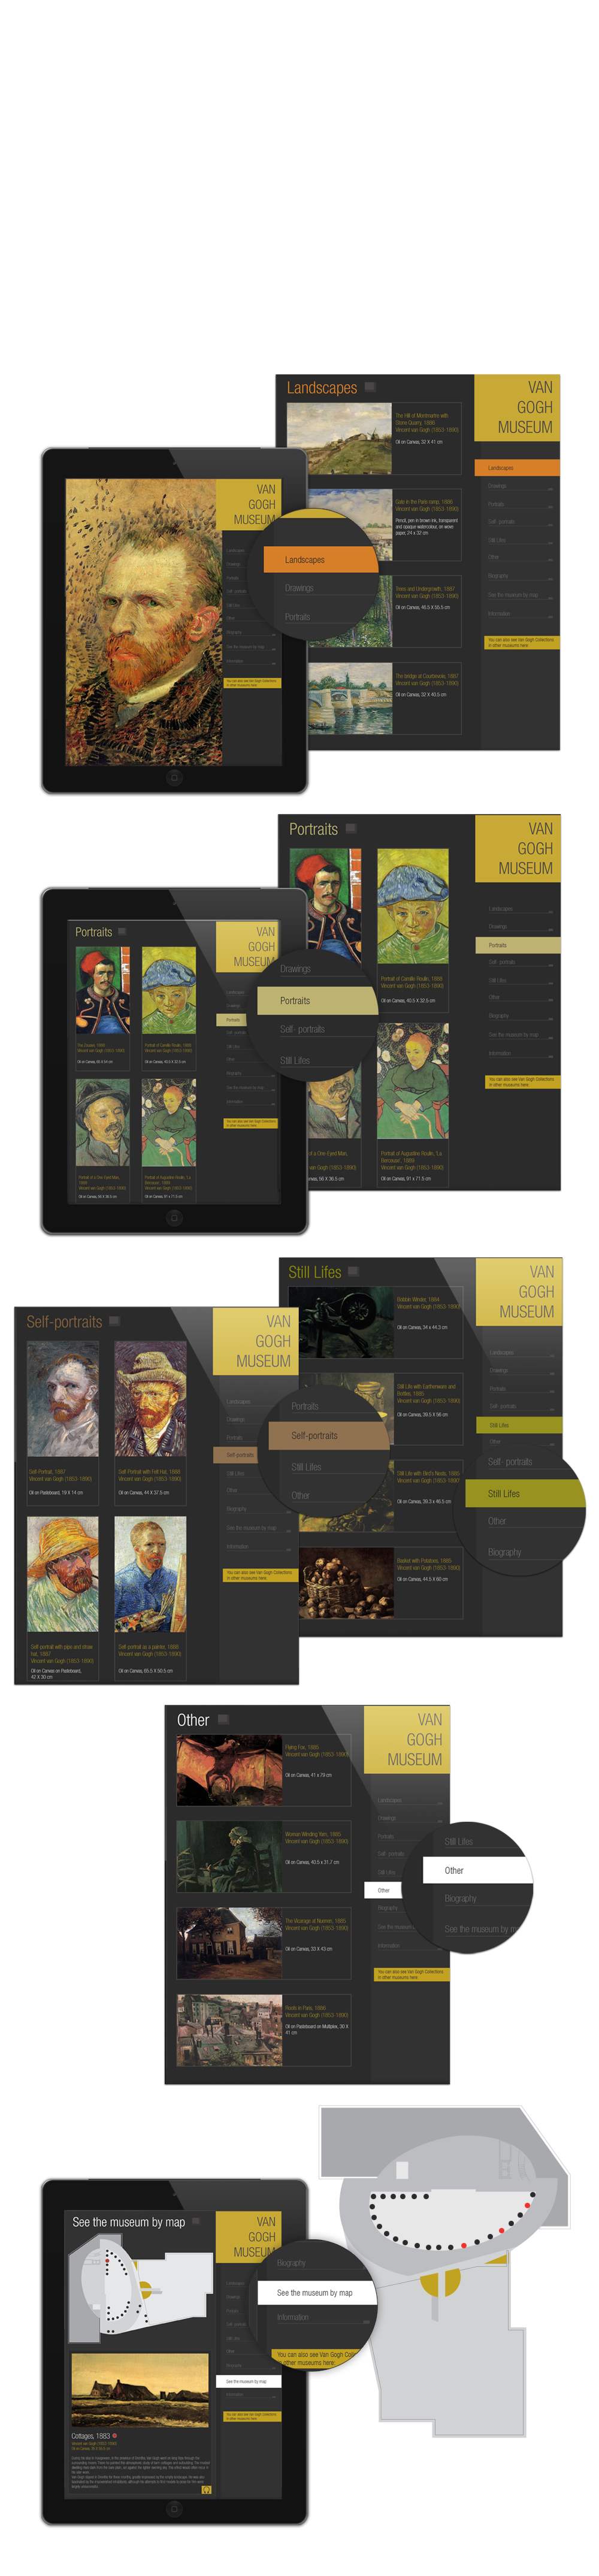 app mobile iPad museum Gogh Van cool design